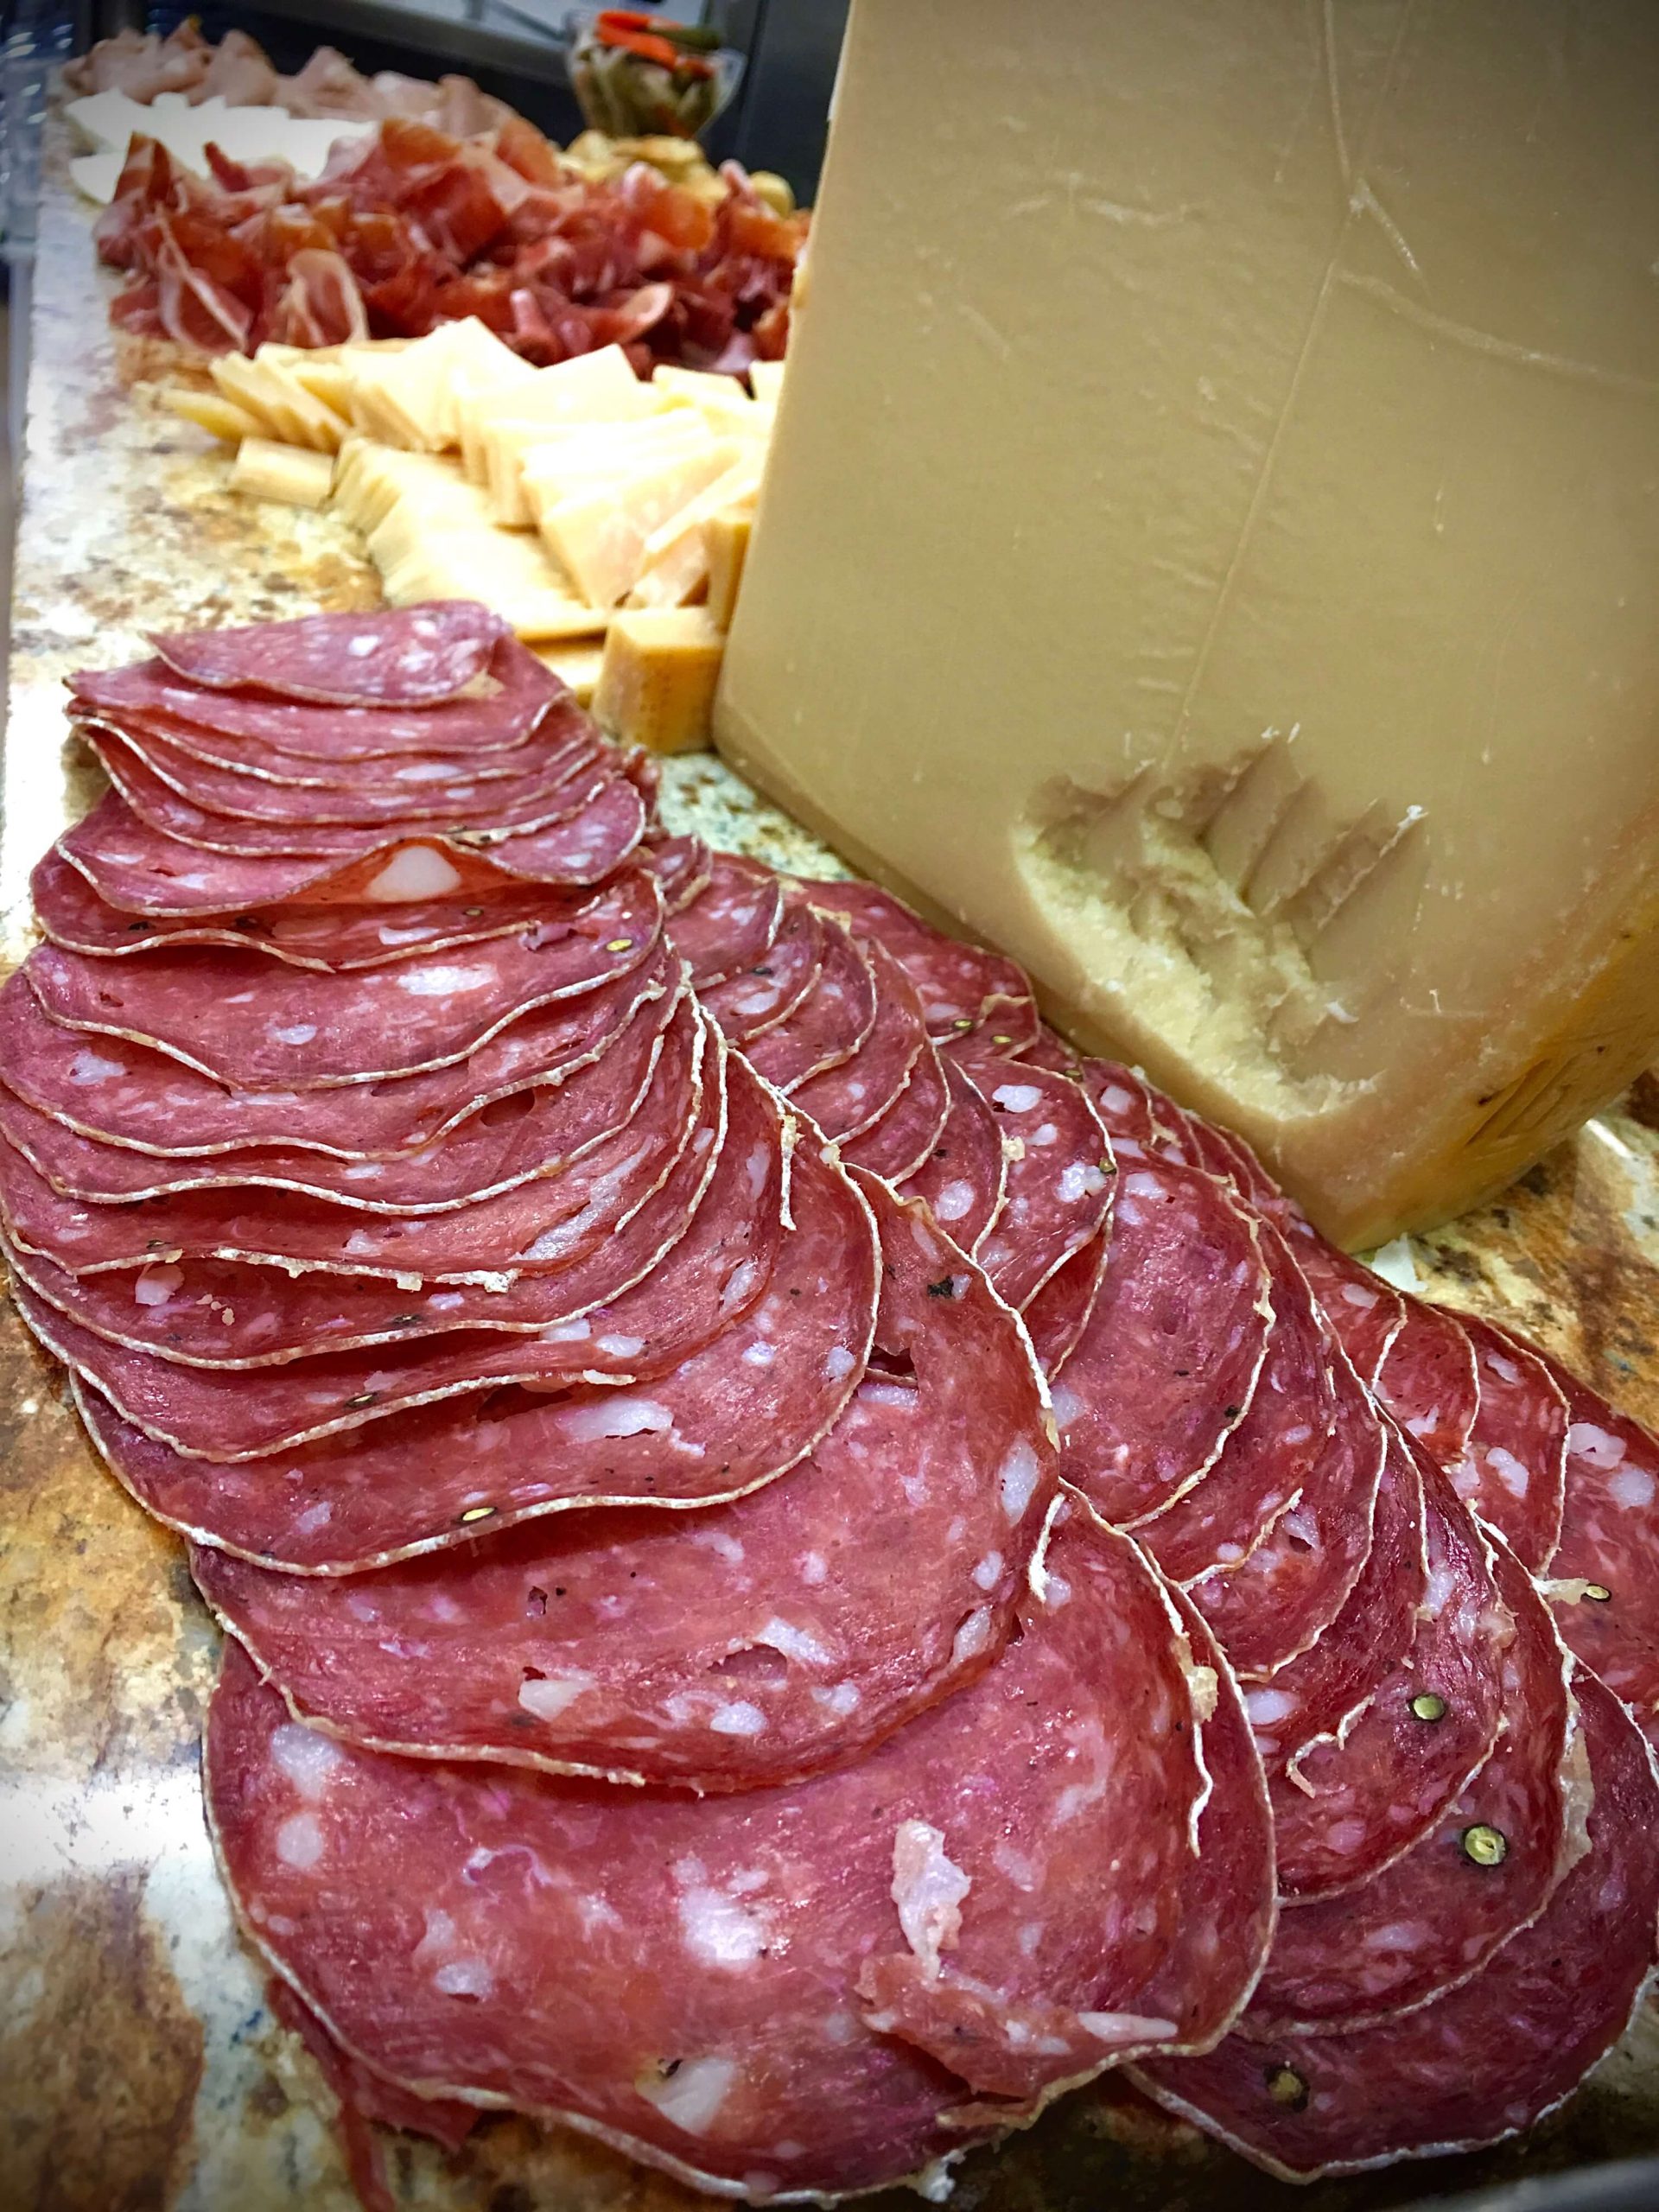 Sliced salami and a hunk of pareggiano reggiano cheese